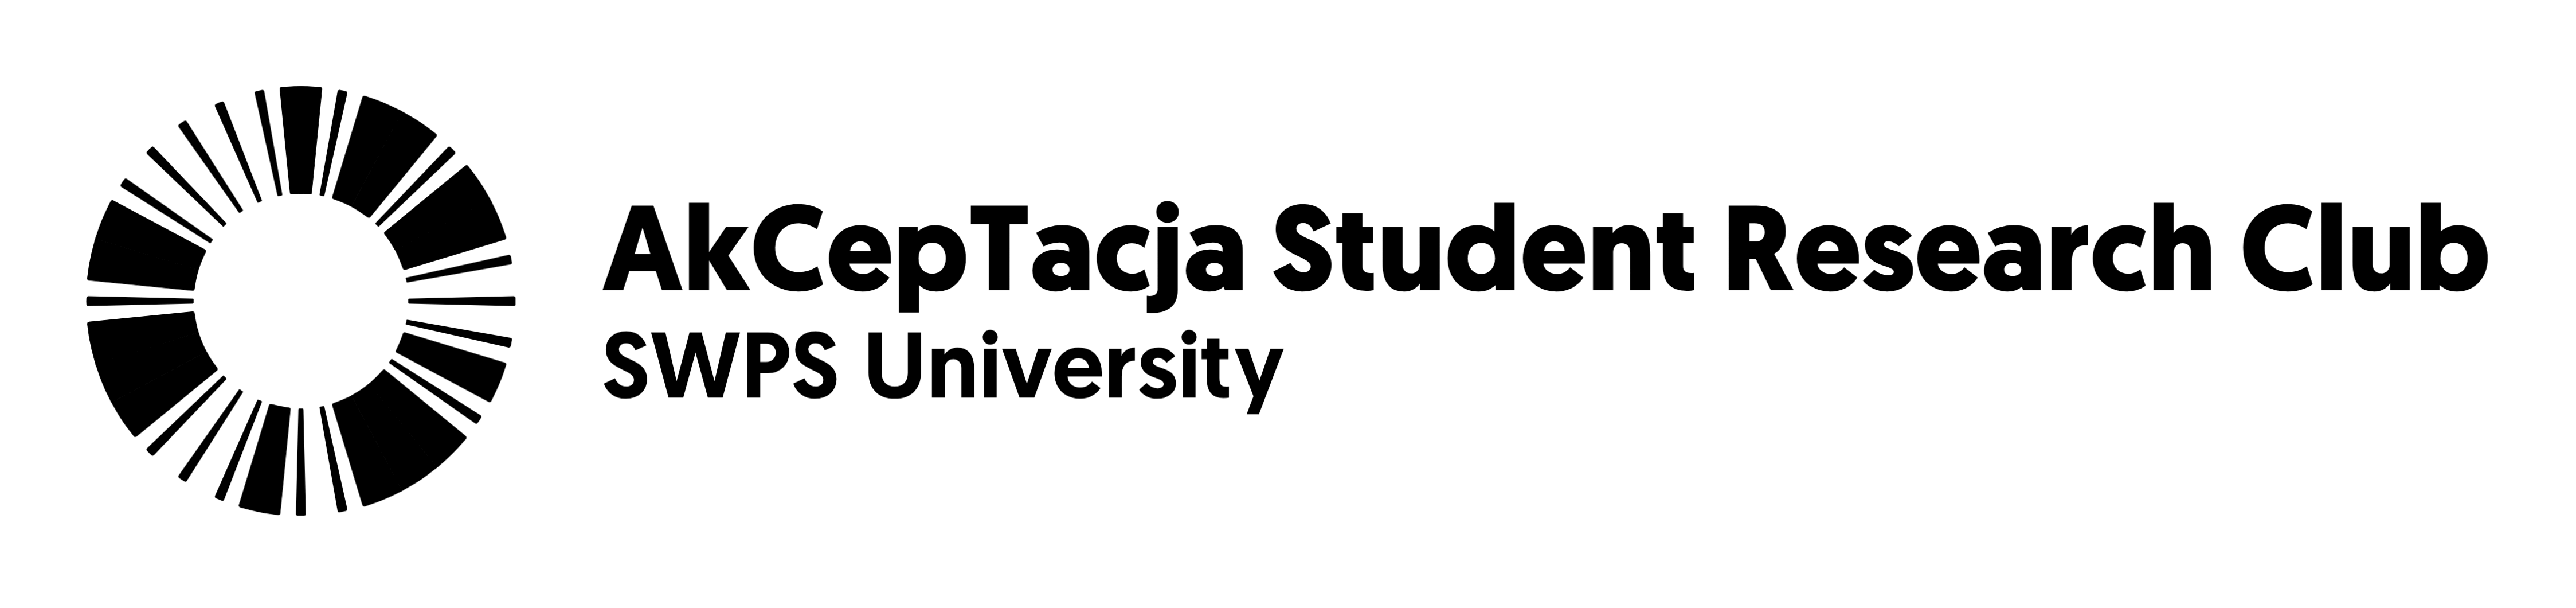 Akceptacja Student Research Club logo